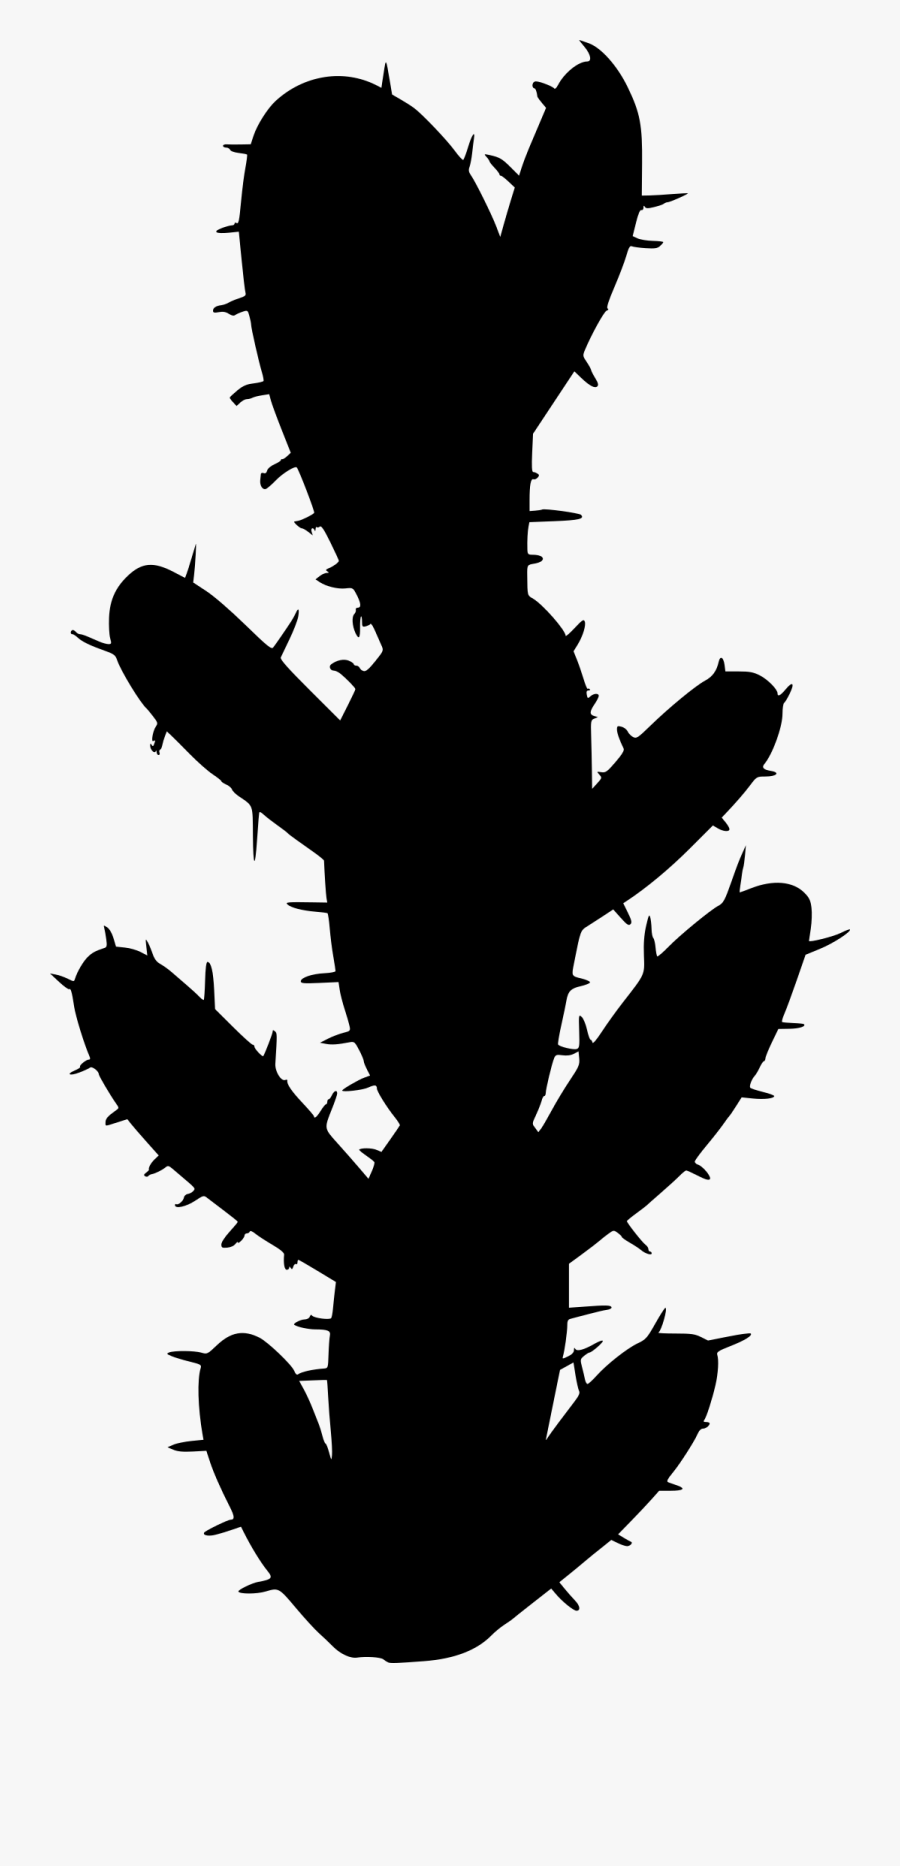 Cactus Silhouette Png - Transparent Cactus Silhouette Vector, Transparent Clipart